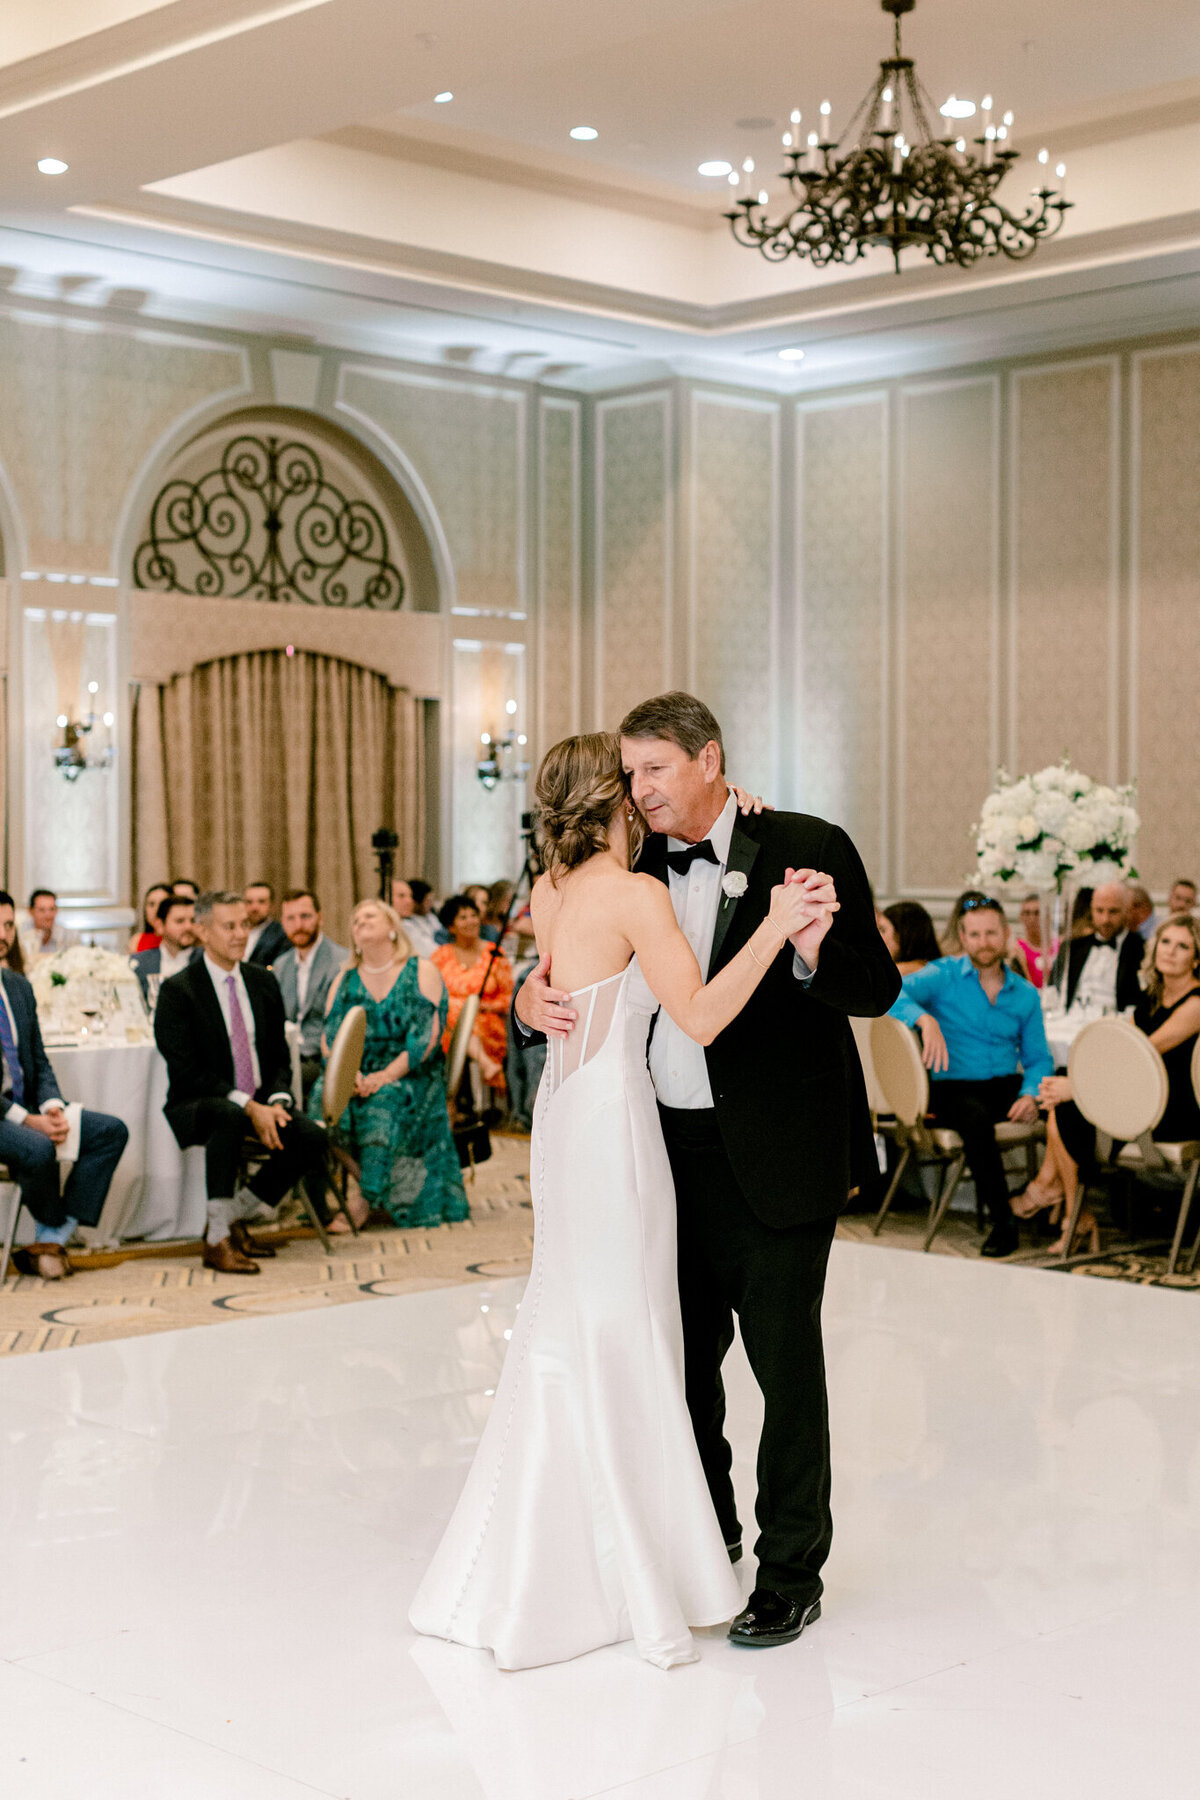 Virginia & Michael's Wedding at the Adolphus Hotel | Dallas Wedding Photographer | Sami Kathryn Photography-211